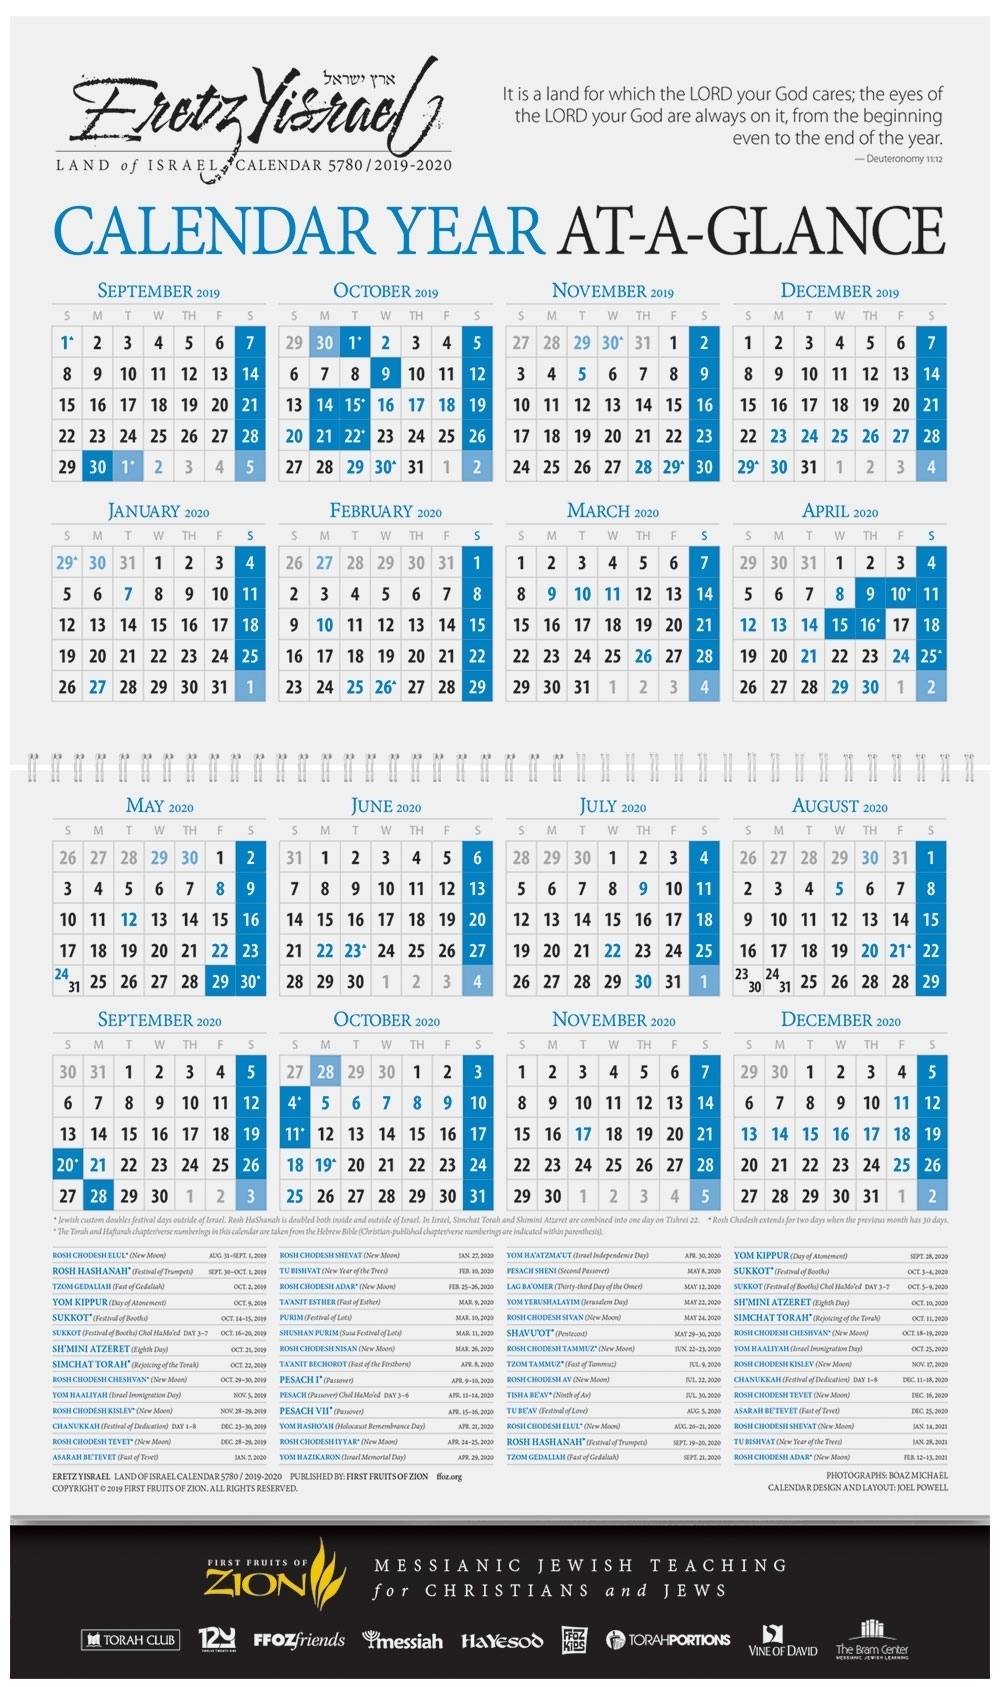 Weekly Torah Parsha Calendar For 2019/2020 - Calendar in 2019 Calendar Of Torah Portions